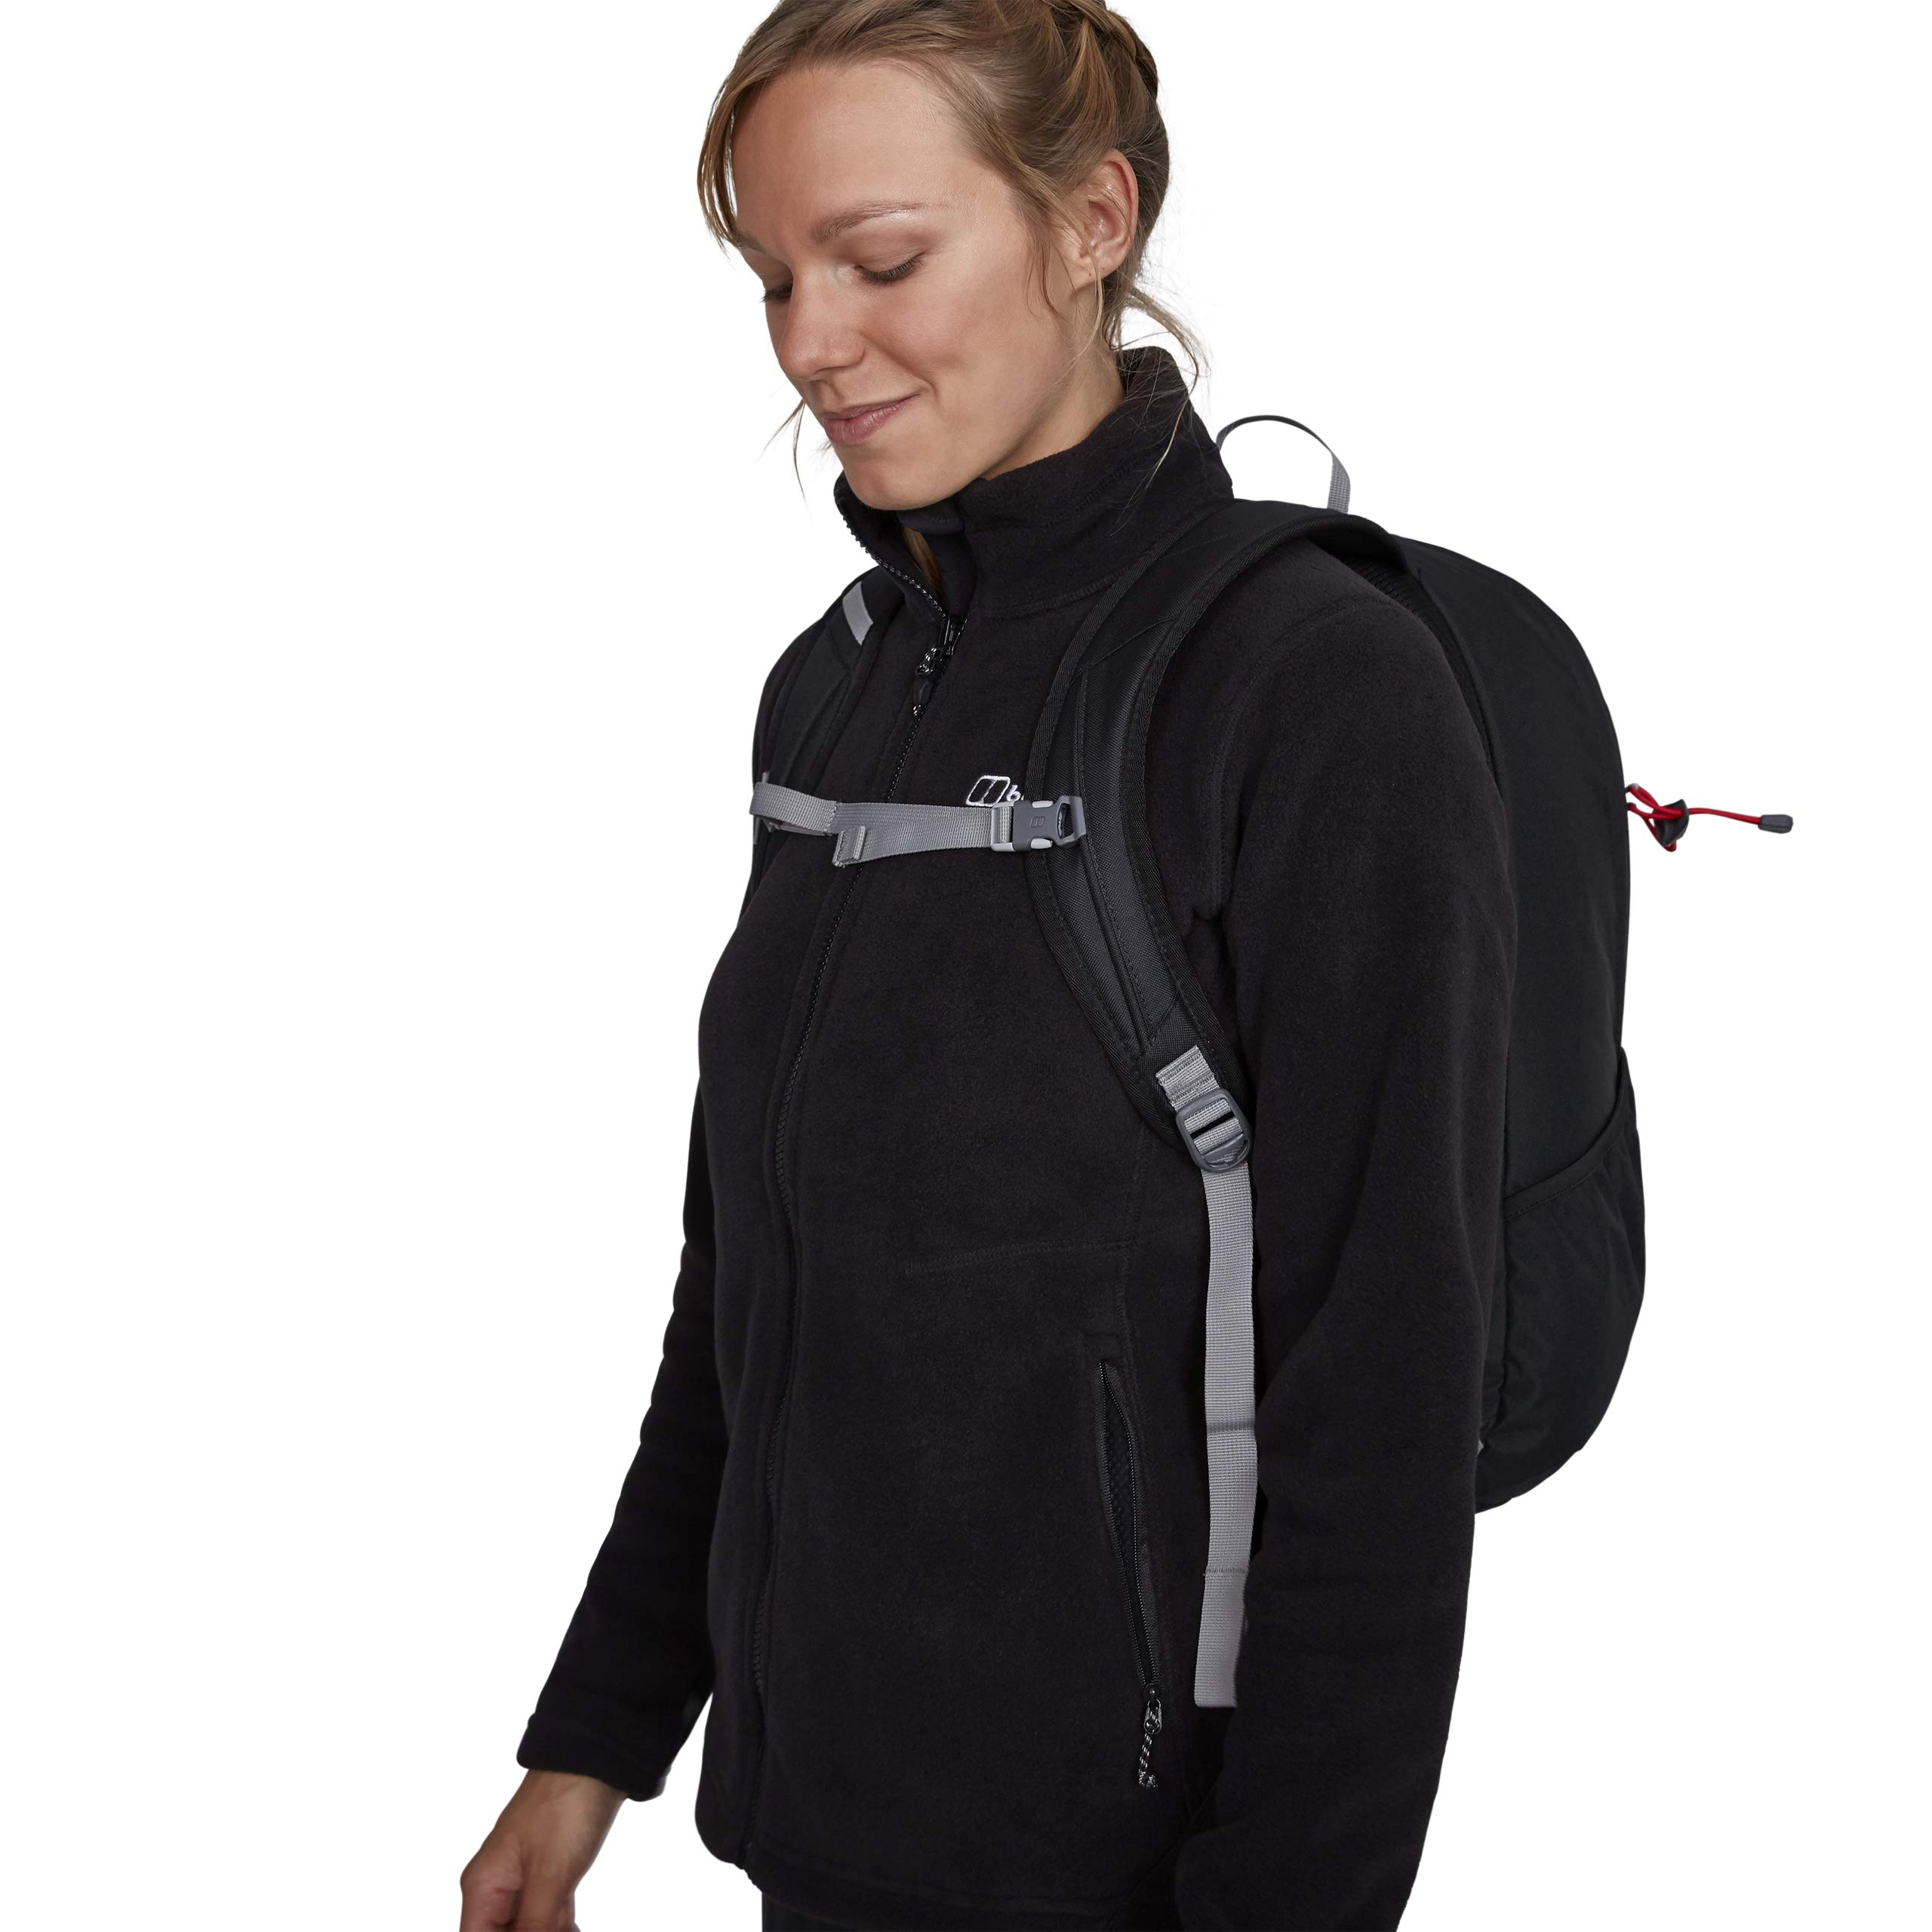 Berghaus Backpack, Black, One Size